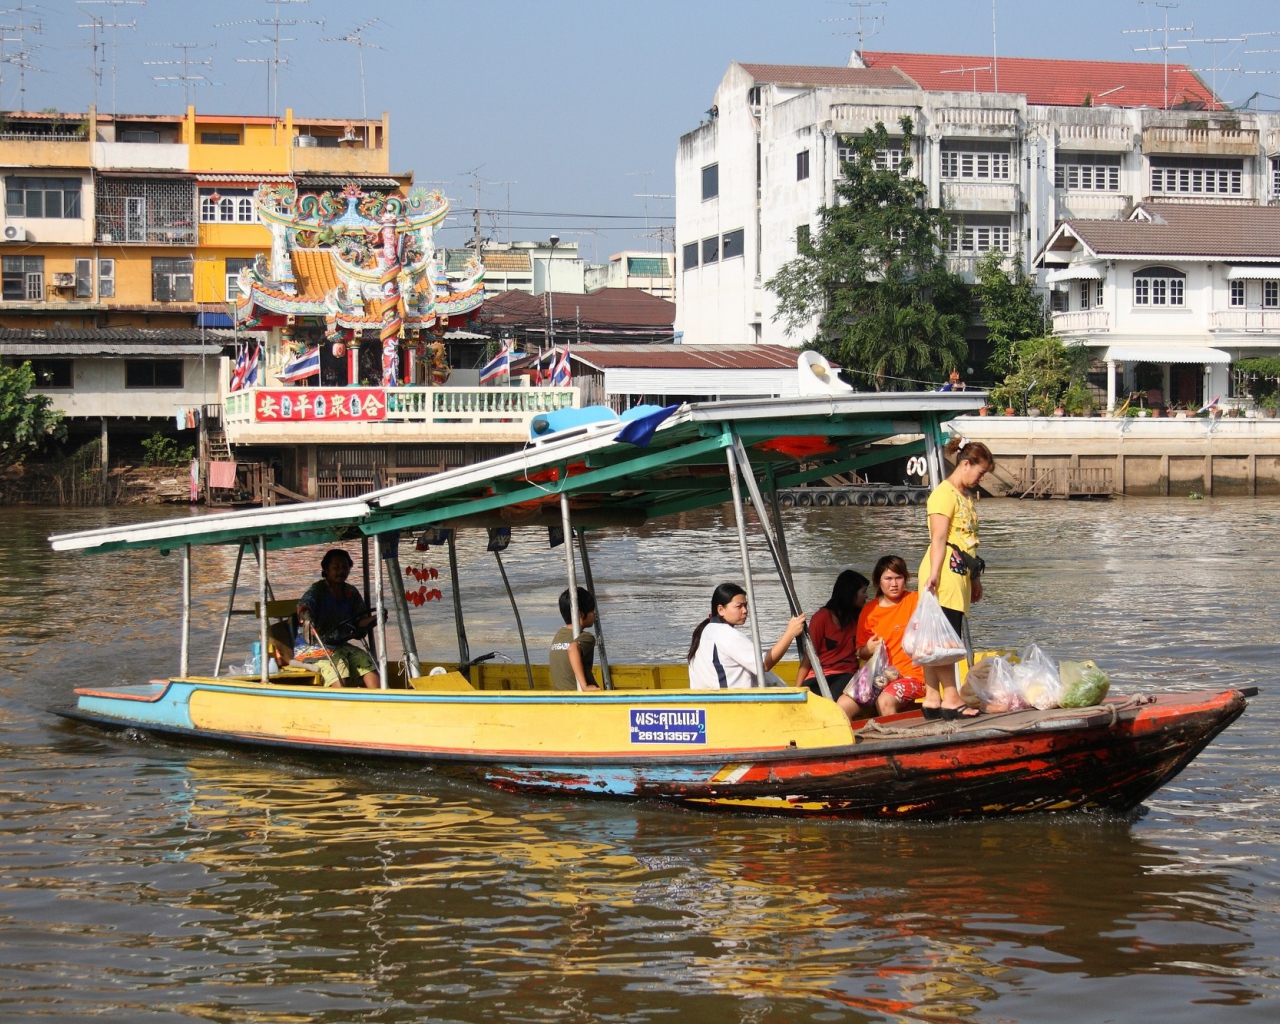 Лодка посреди города на курорте Аютайя, Таиланд